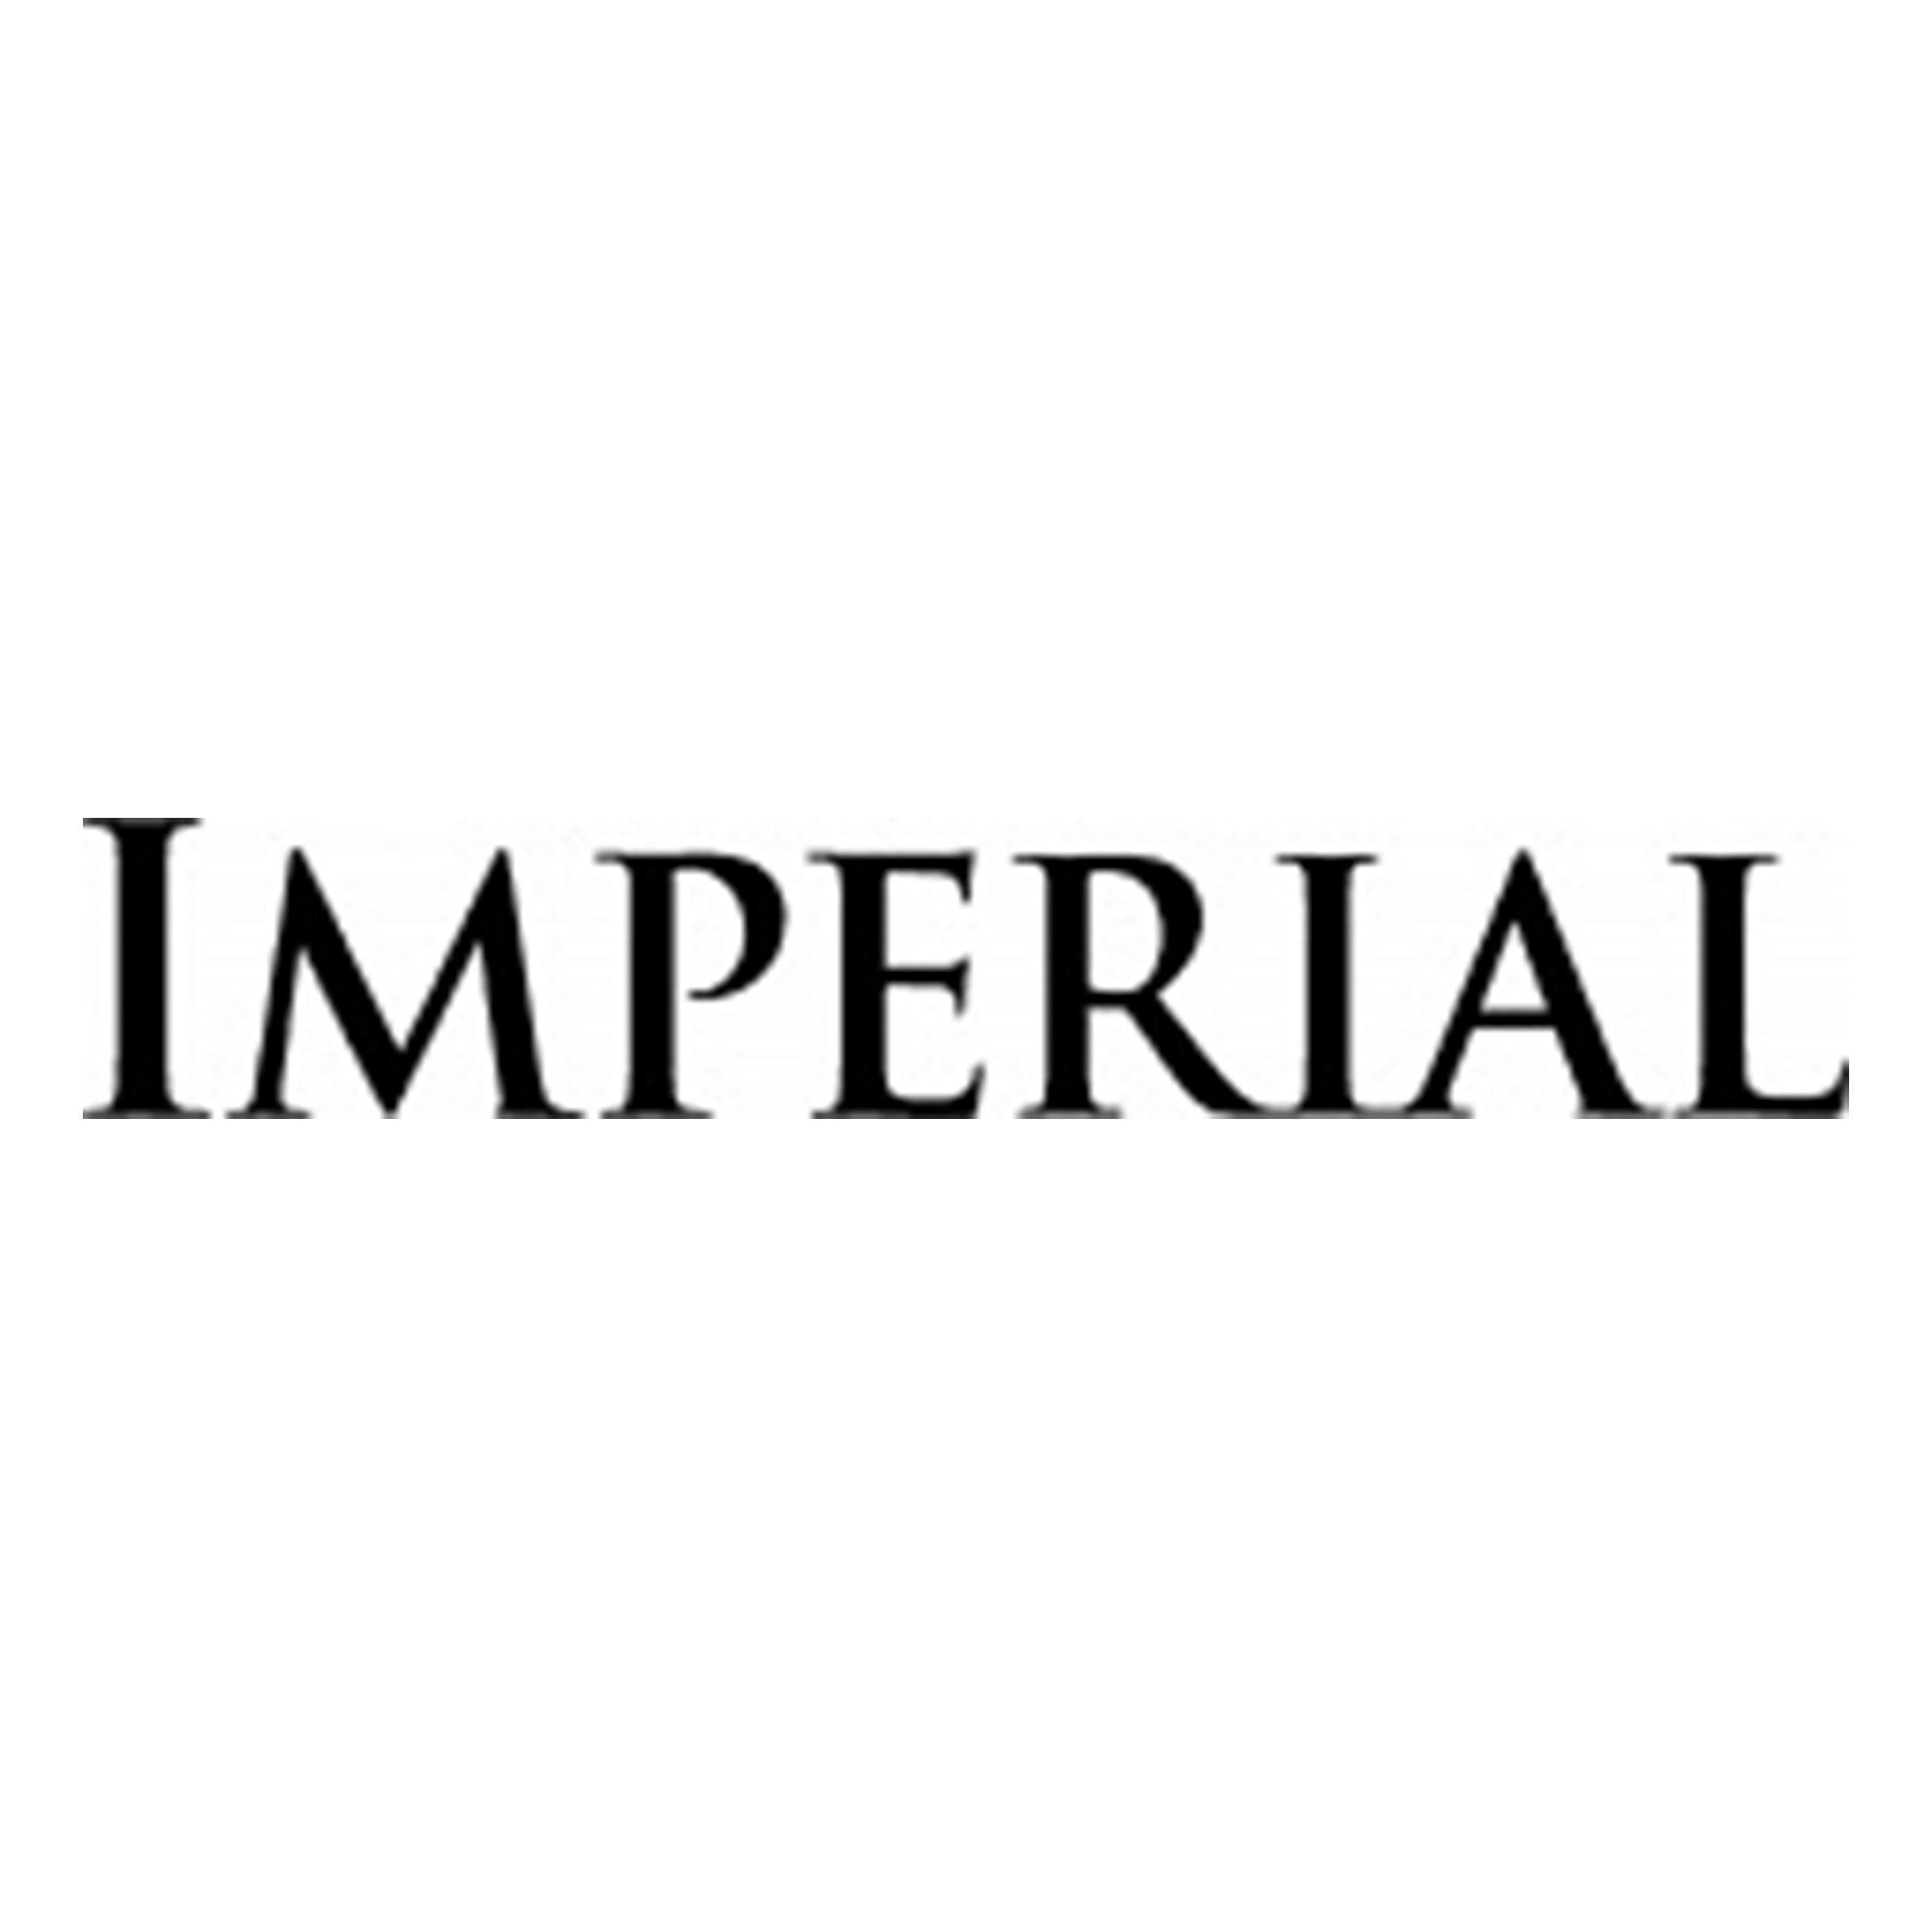 974-Imperial